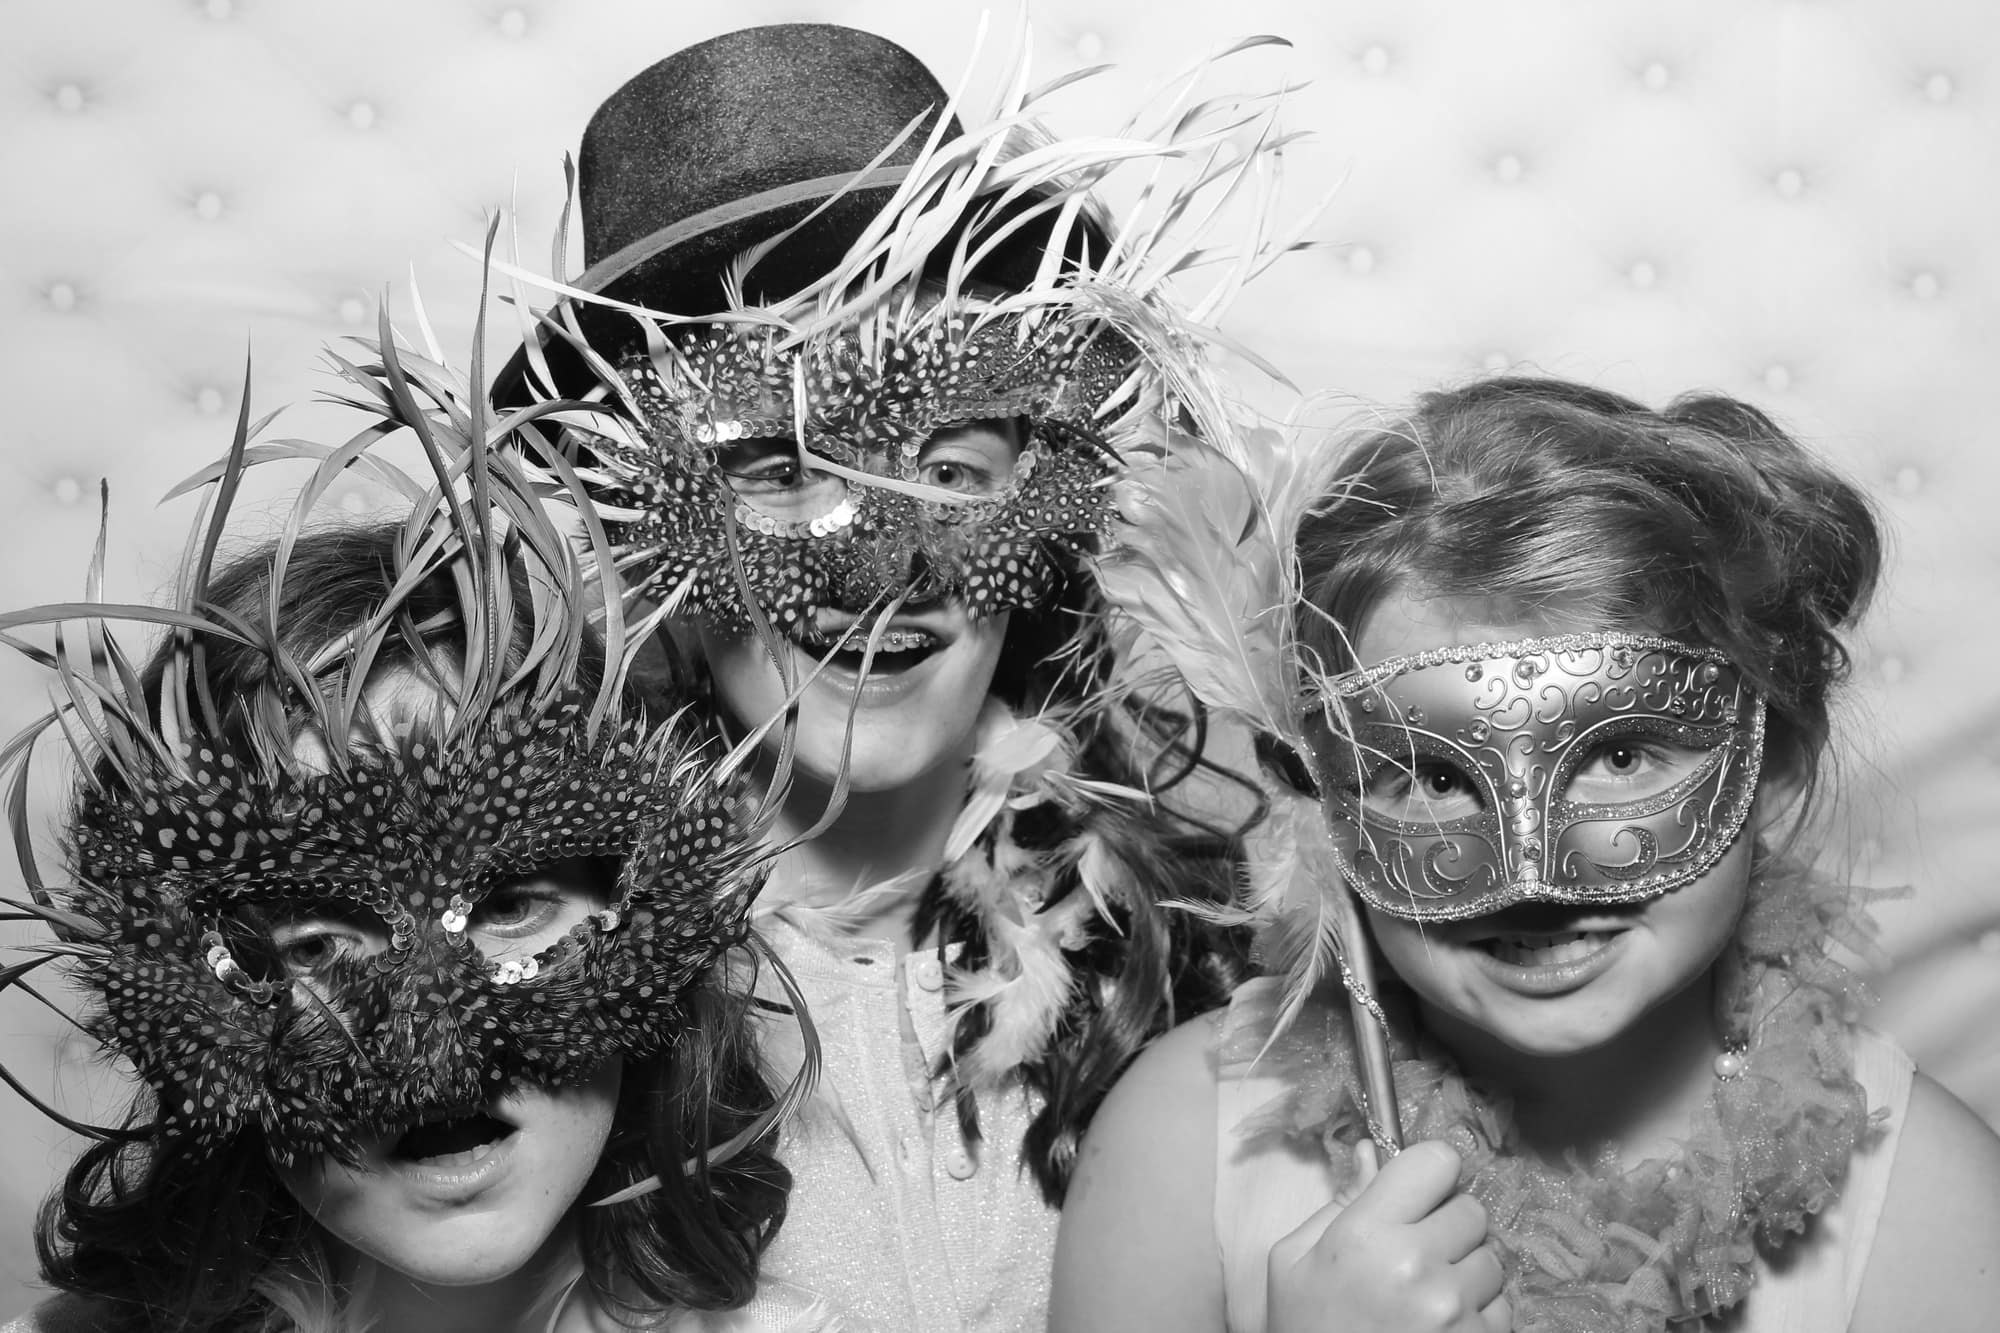 Photobooth-Rental-Austin-Wimberley-Wedding-Reception-Memories-No. 1-Awesome-Fun-Props